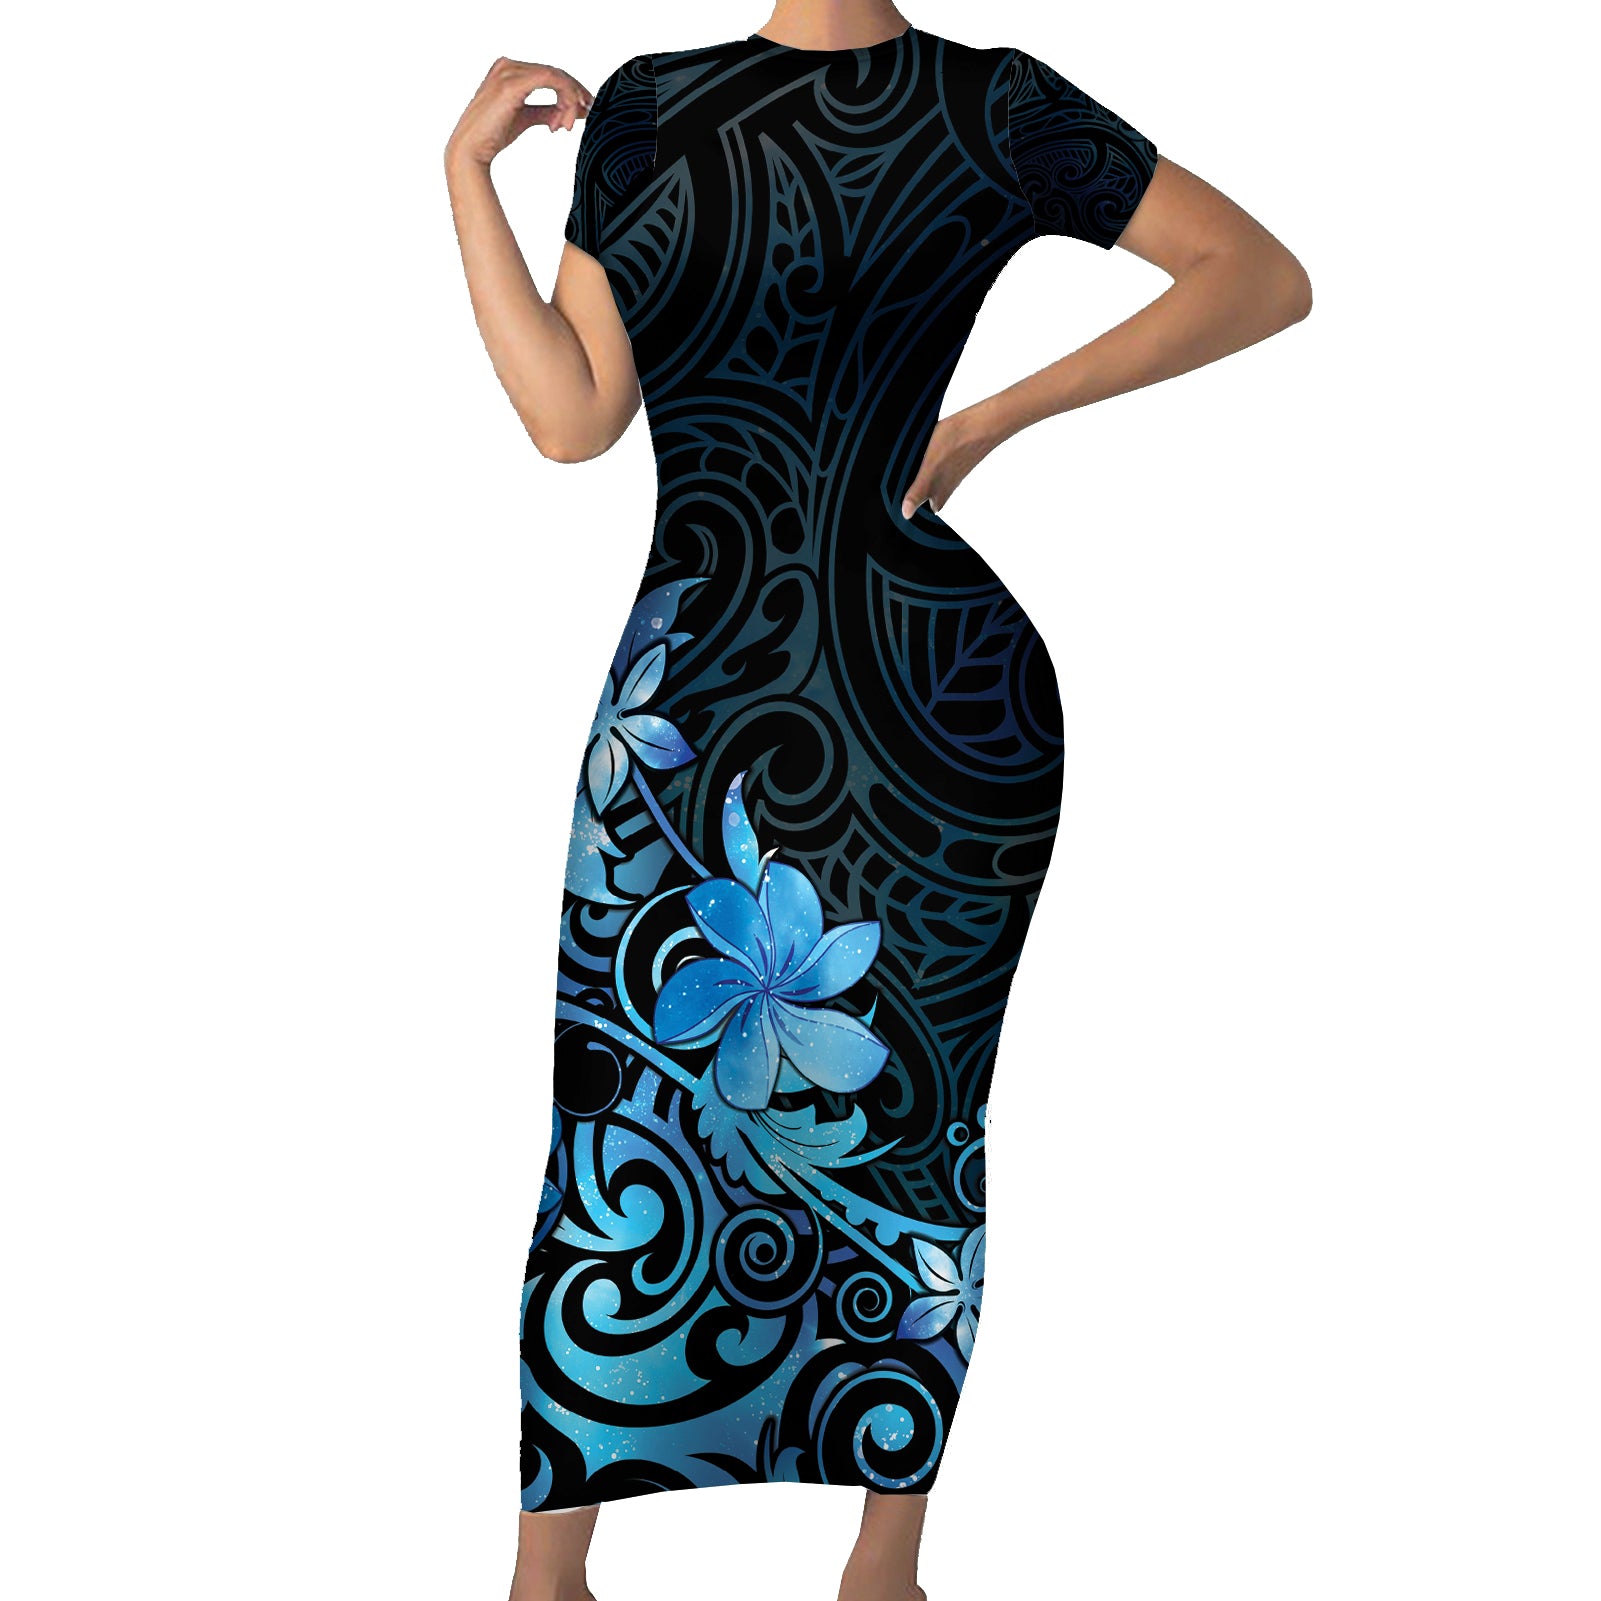 Matariki New Zealand Short Sleeve Bodycon Dress Maori Pattern Blue Galaxy